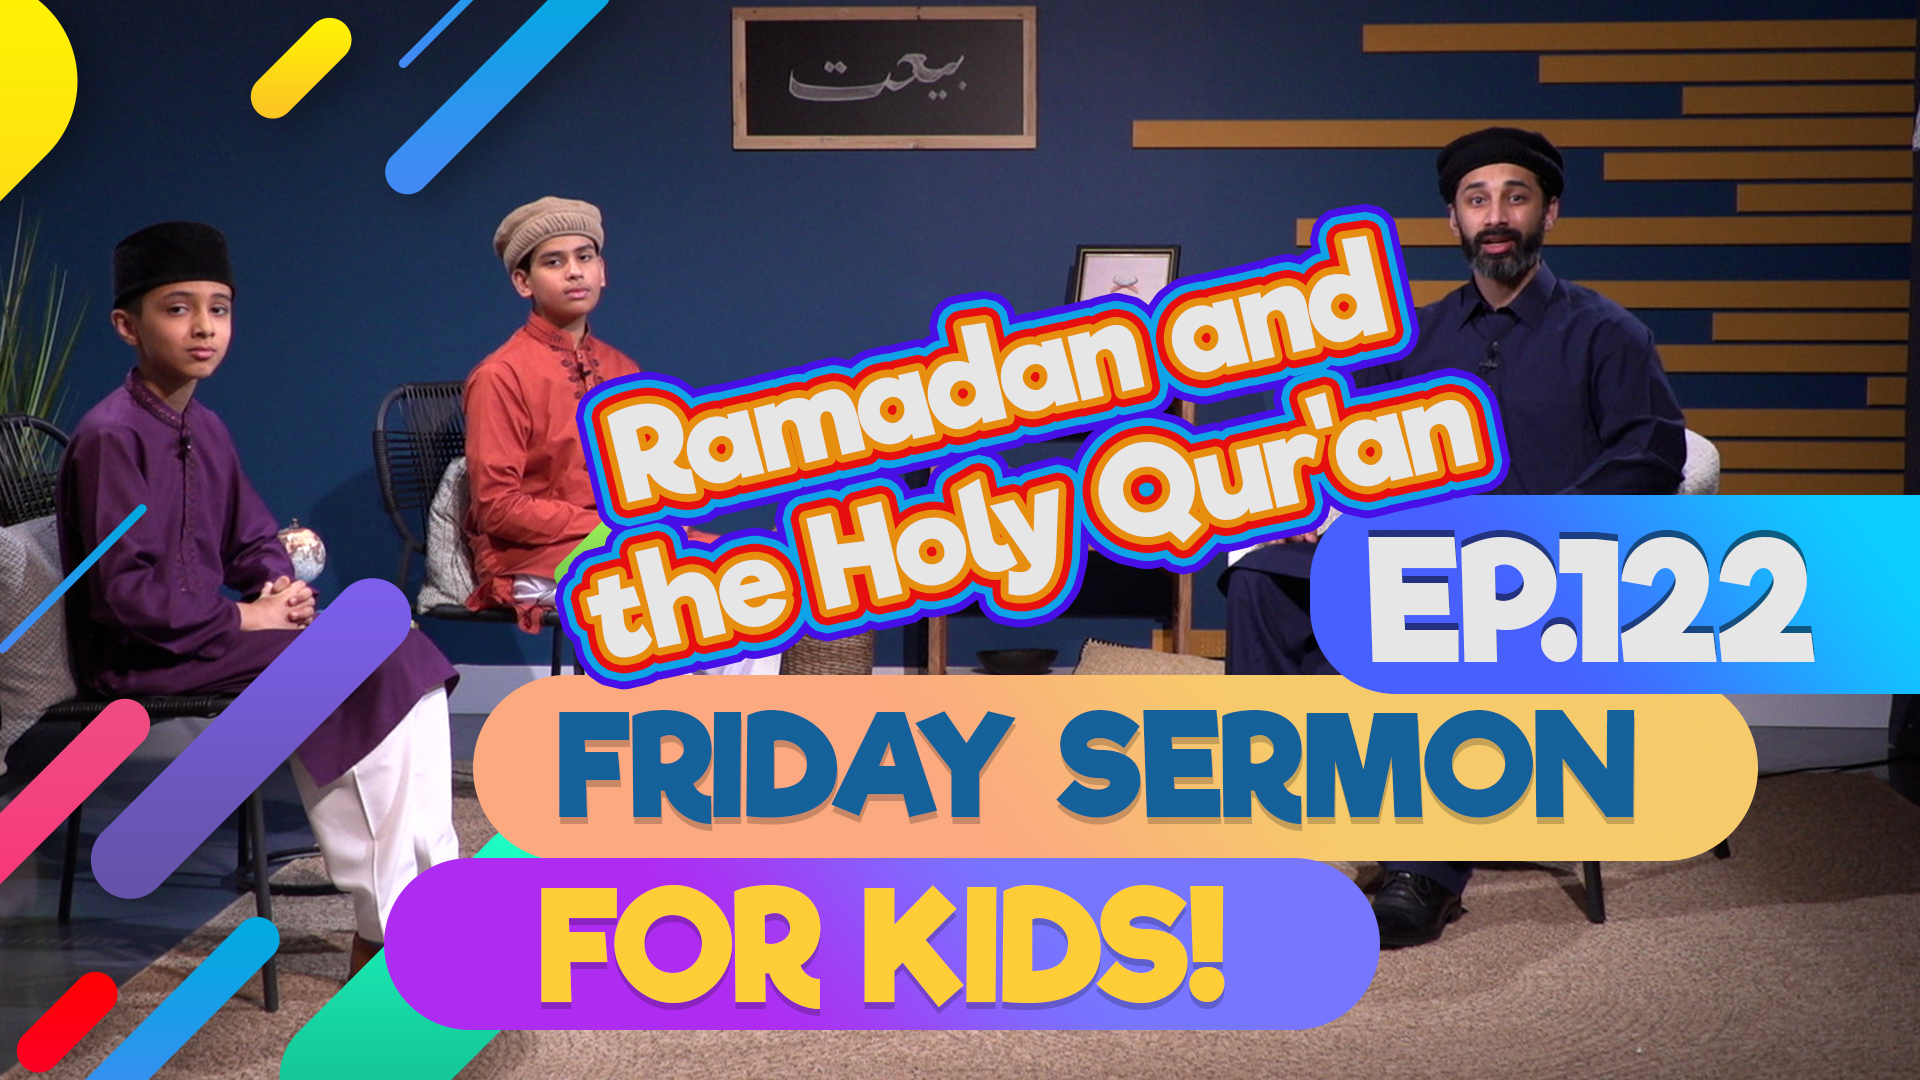 Friday Sermon 4 Kids